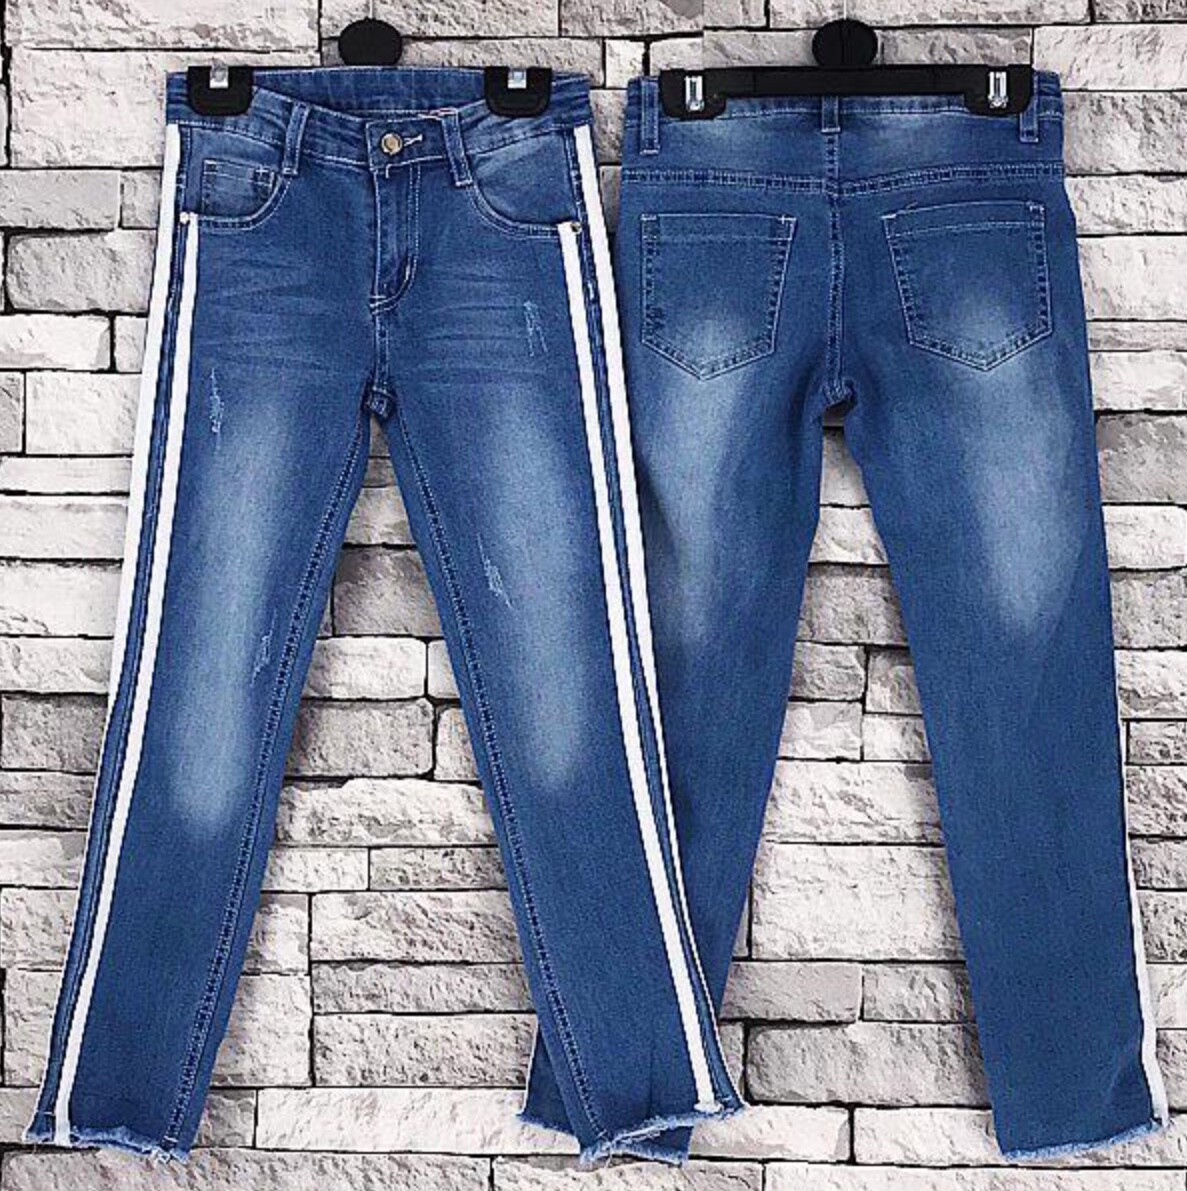 blue jeans white stripes